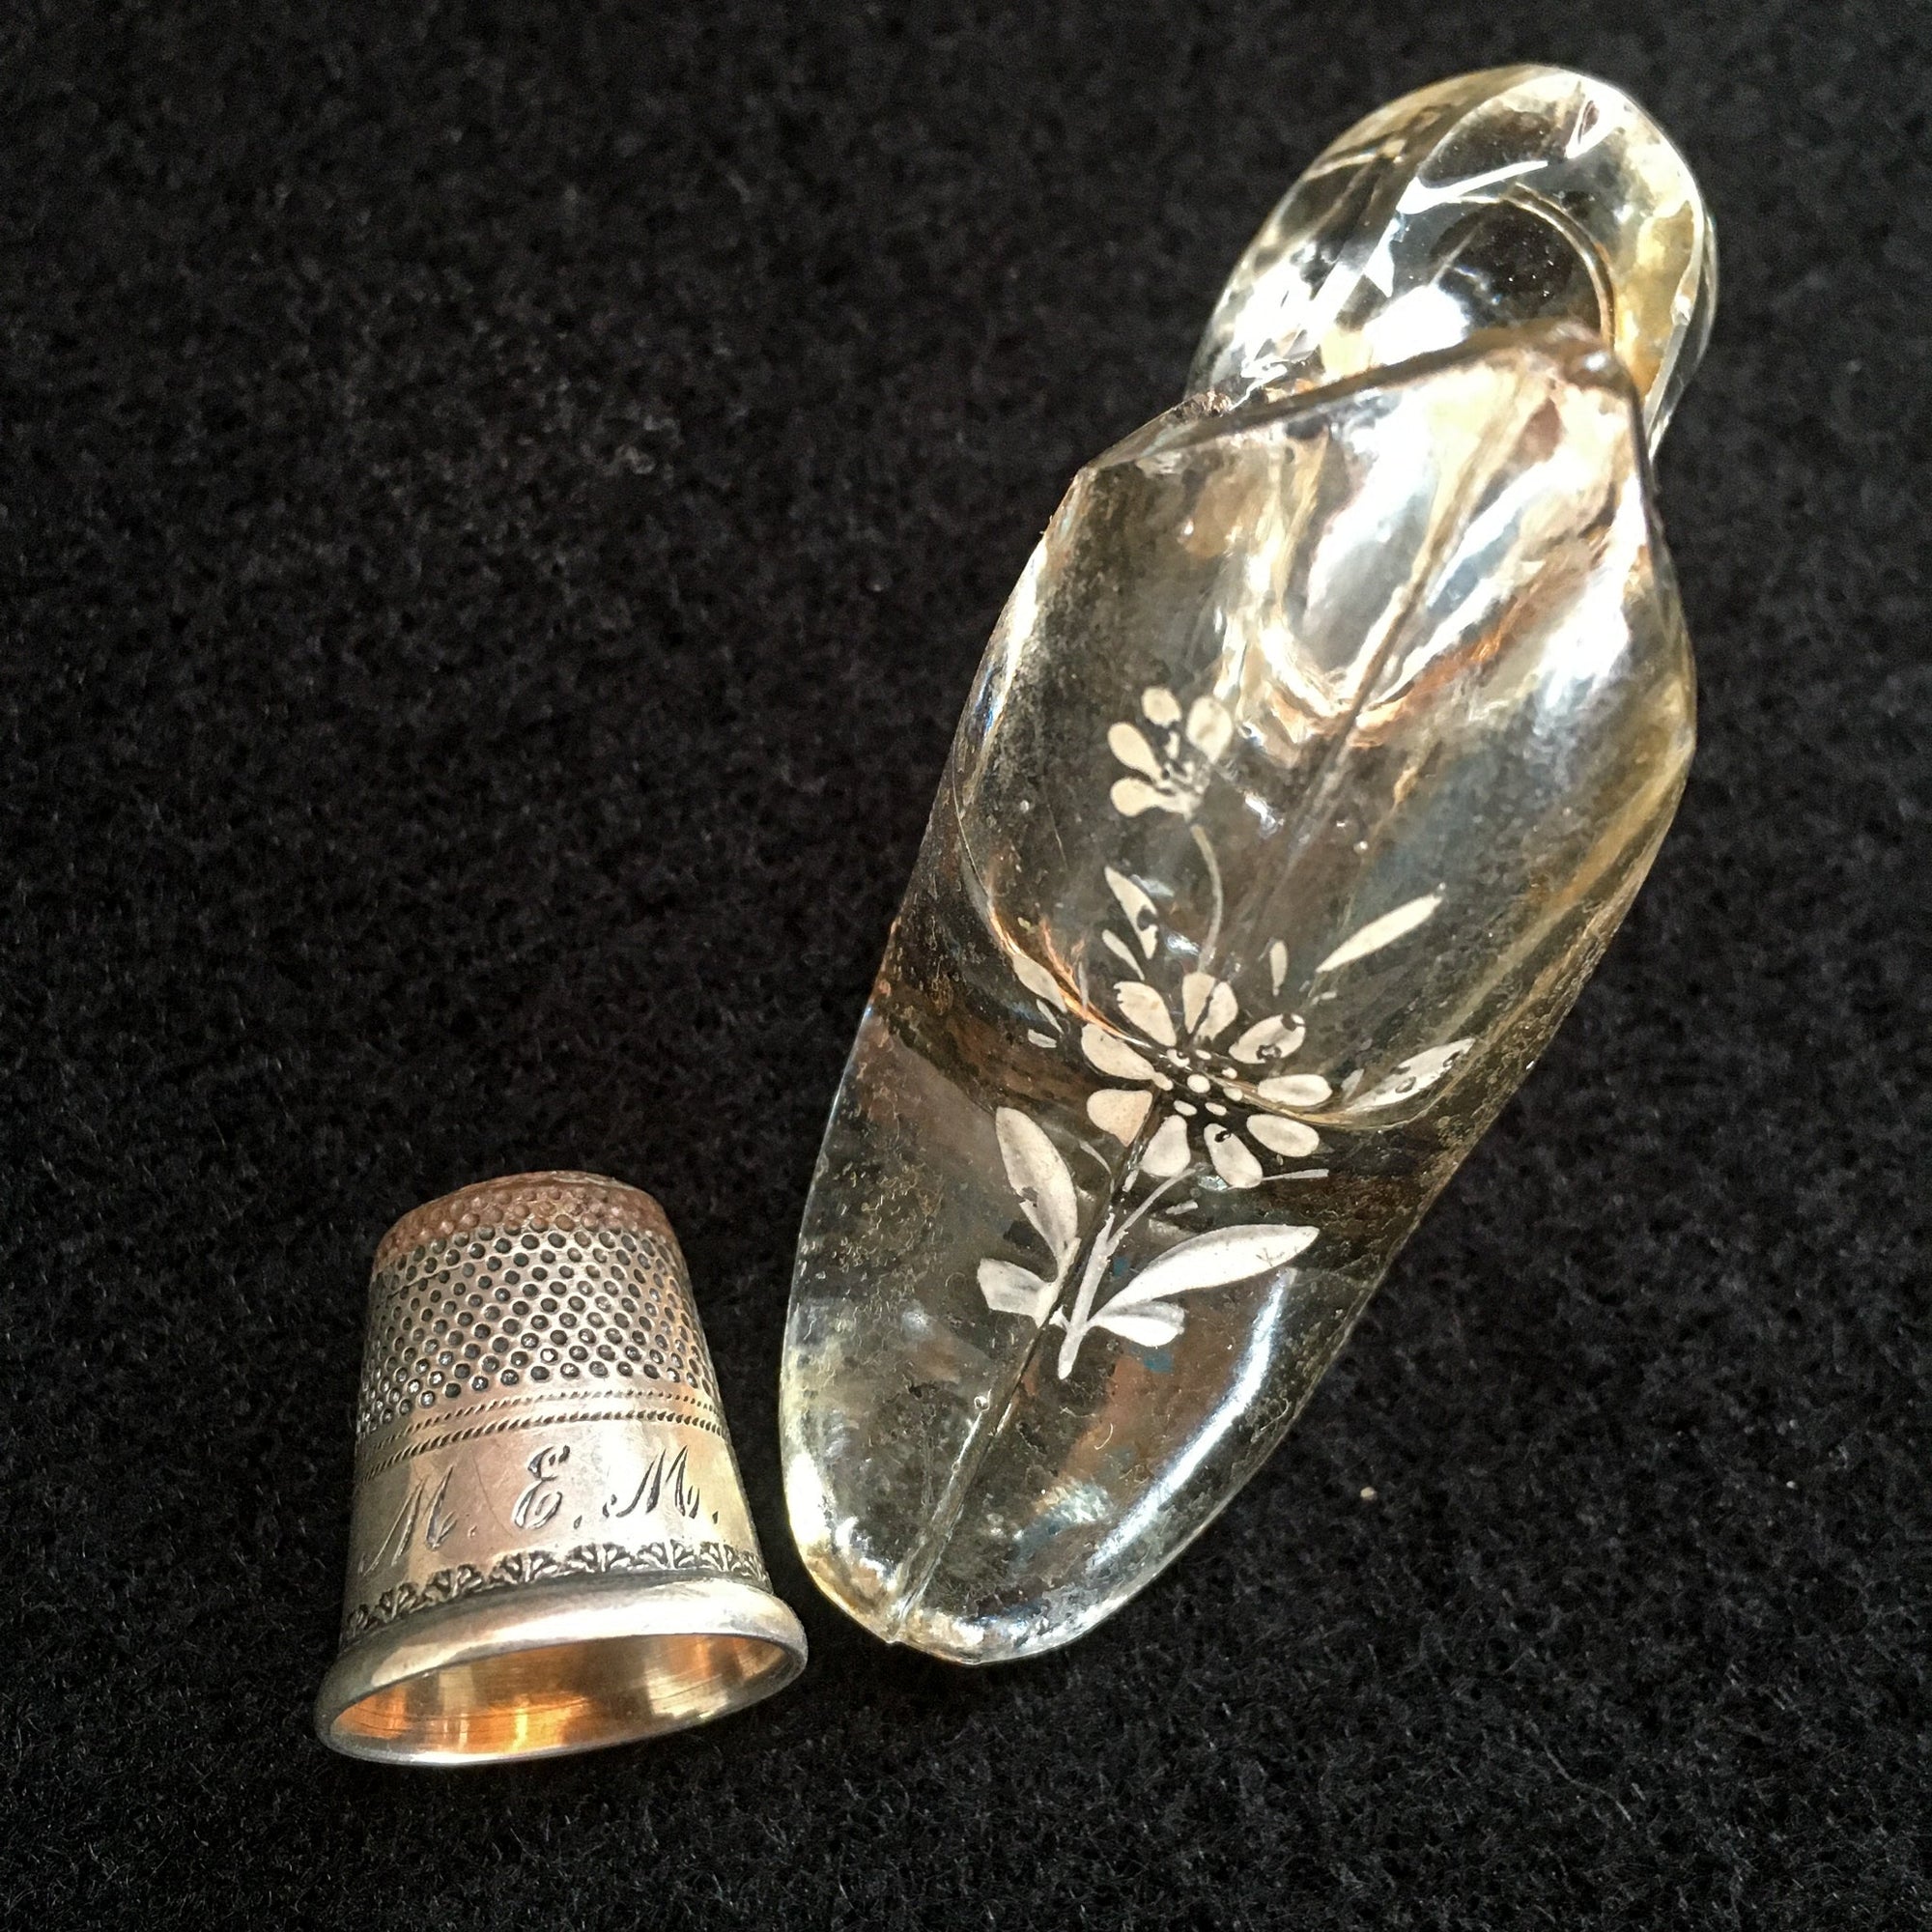 Vintage Glass Slipper Thimble Holder with Thimble, Size 6, Engraved “M.E.M.”